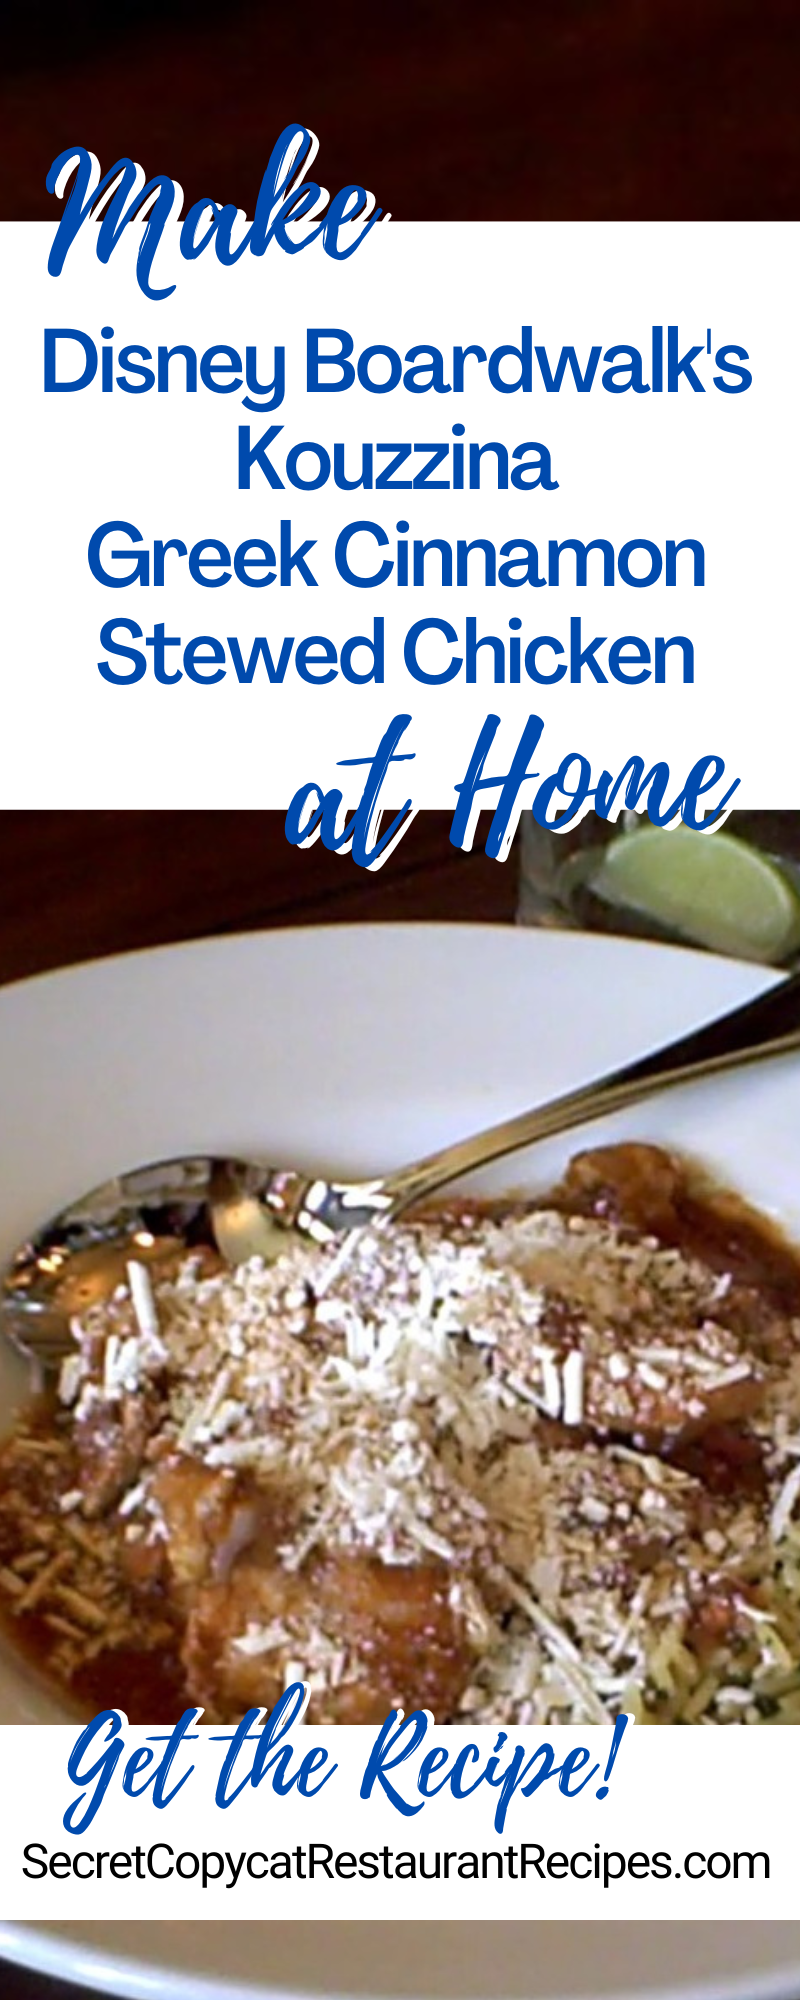 Disney Boardwalk's Kouzzina Greek Cinnamon Stewed Chicken Recipe